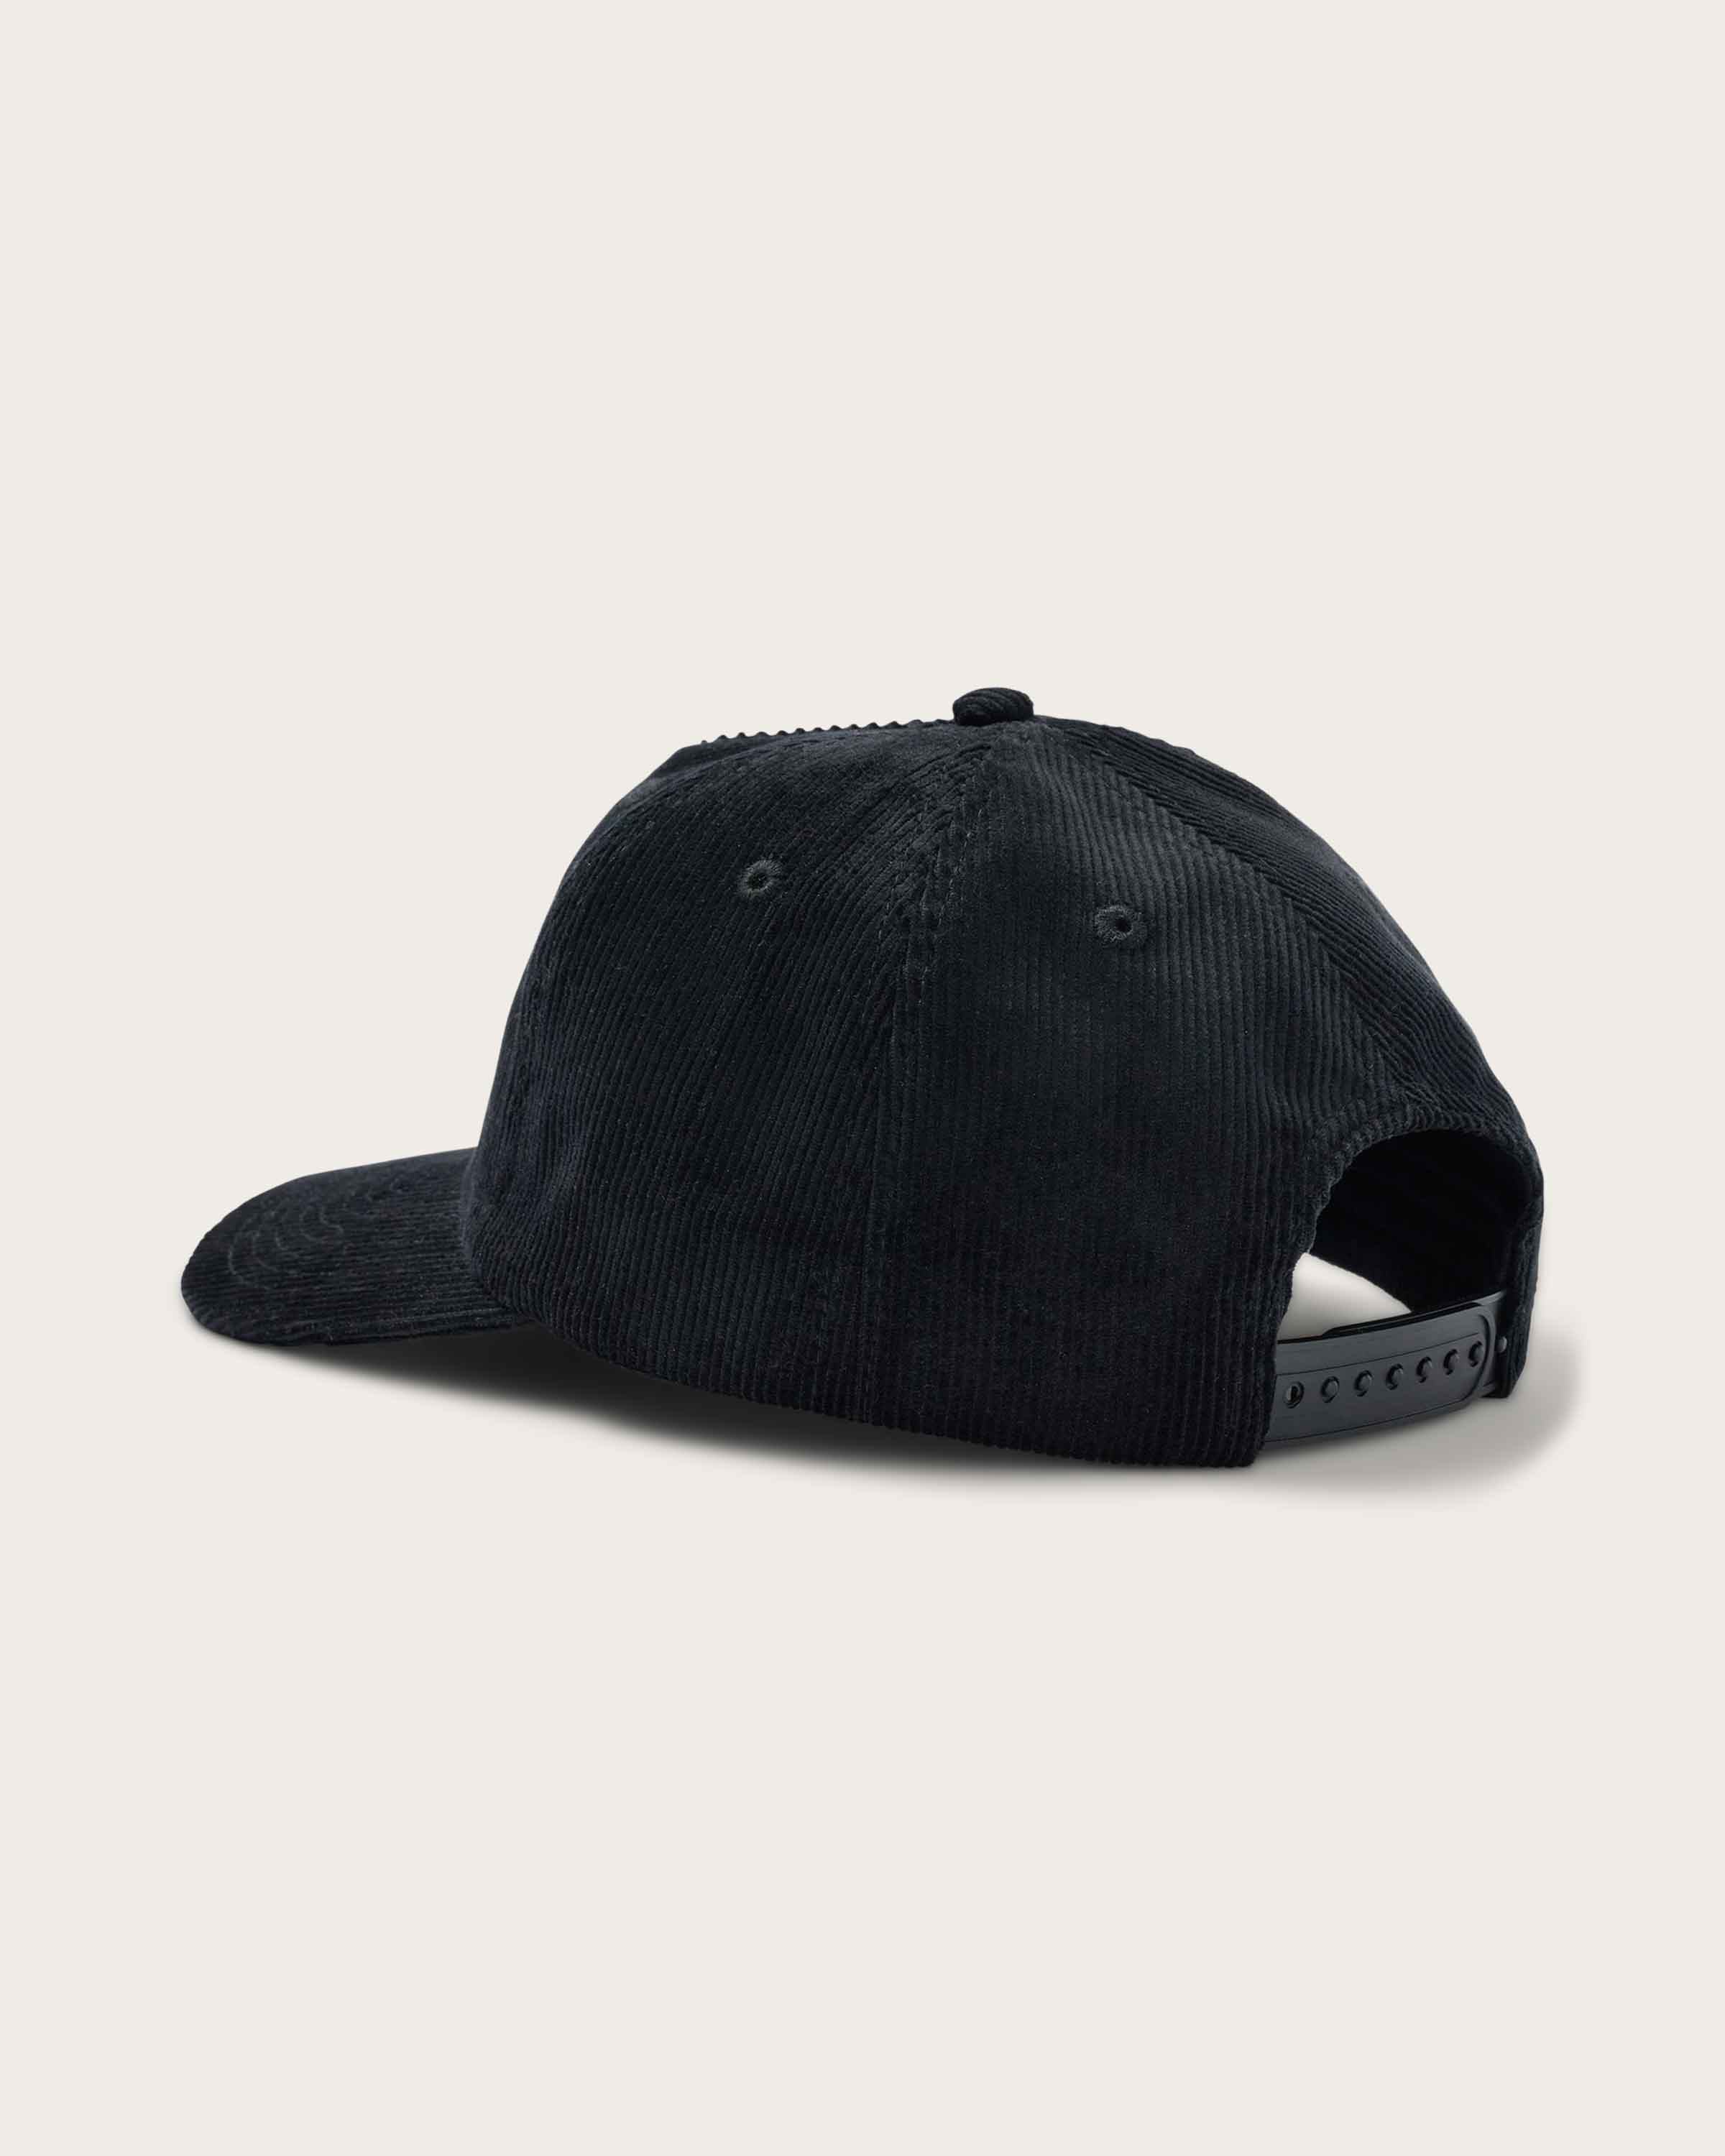 Wesley 5 Panel Hat in Black - undefined - Hemlock Hat Co. Ball Caps